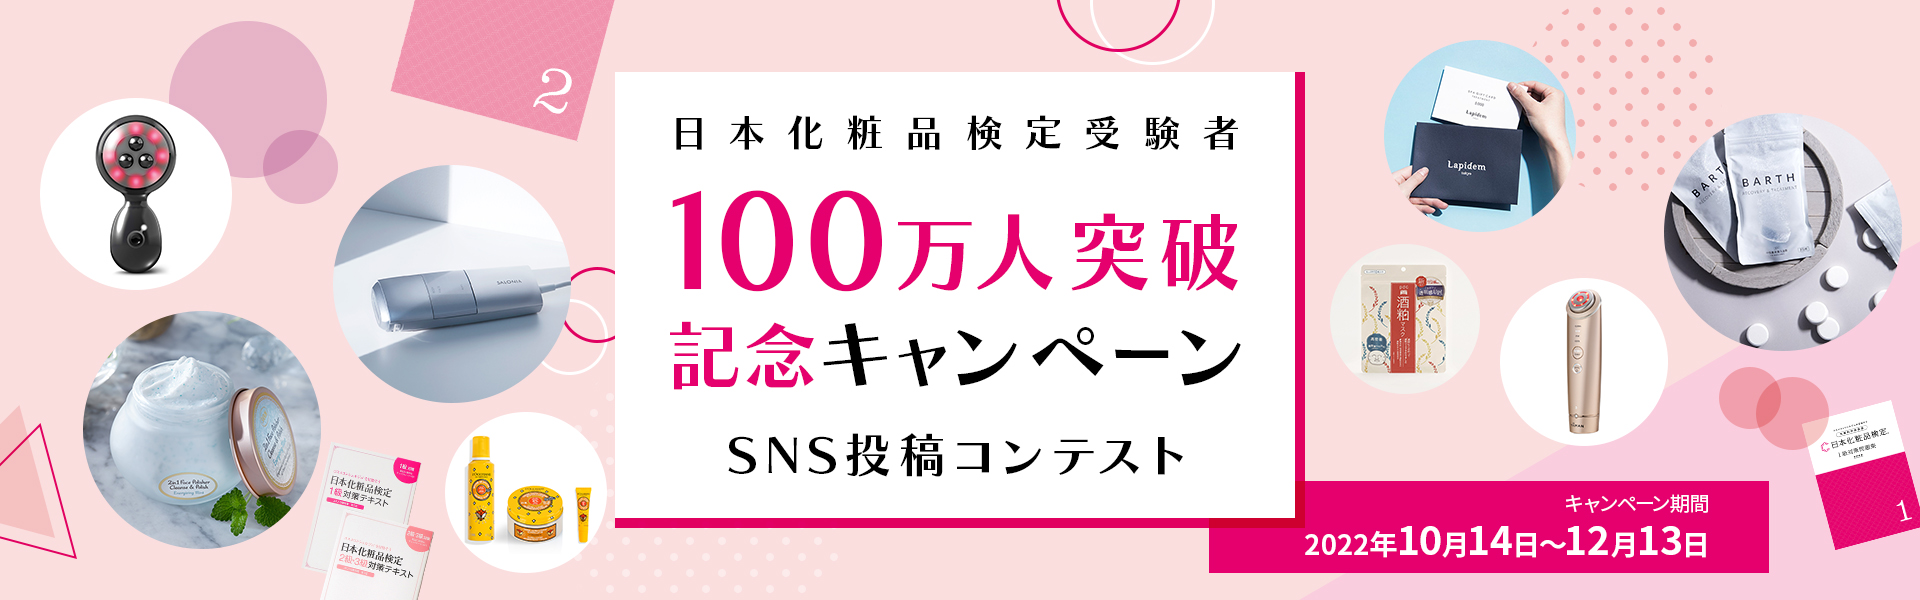 日本化粧品検定受験者 100万人突破記念キャンペーン